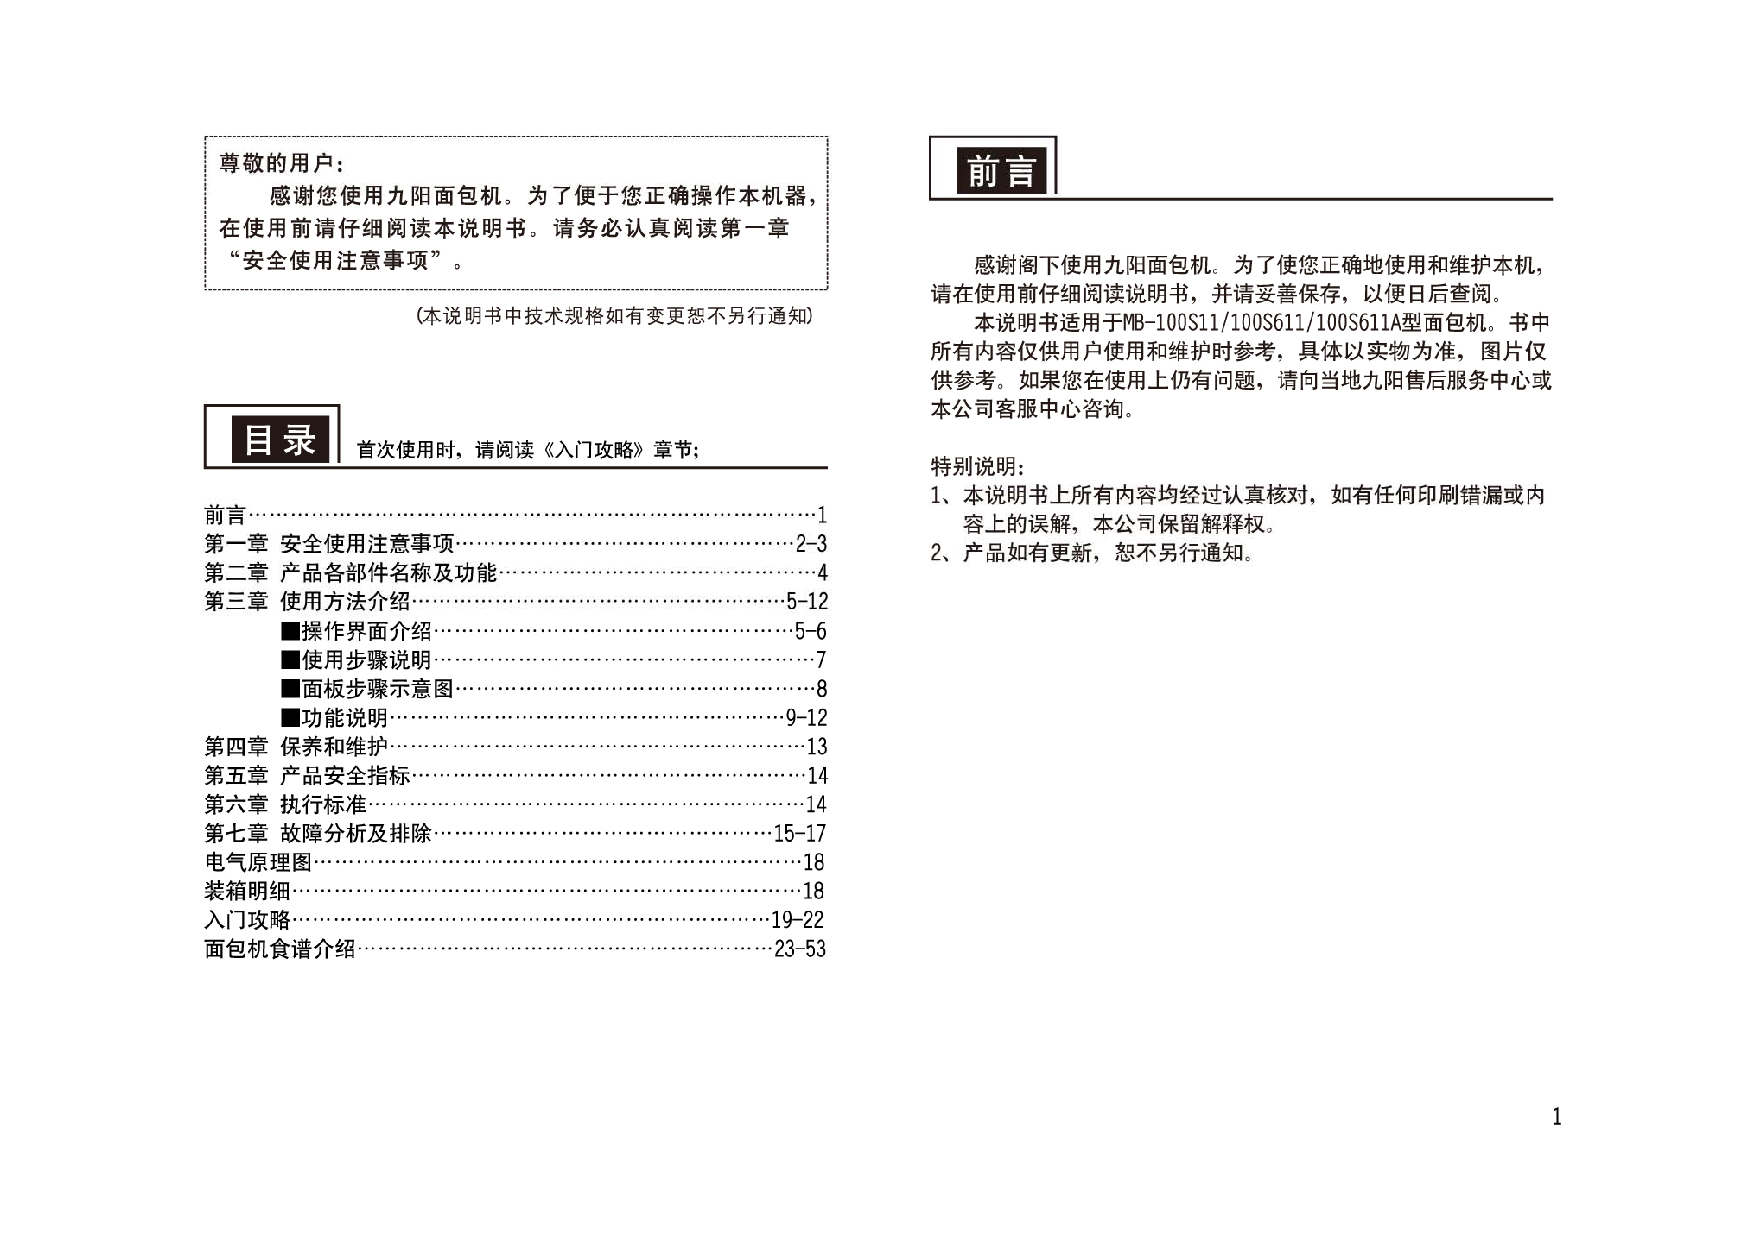 九阳 Joyyoung MB-100S11 使用说明书 第1页